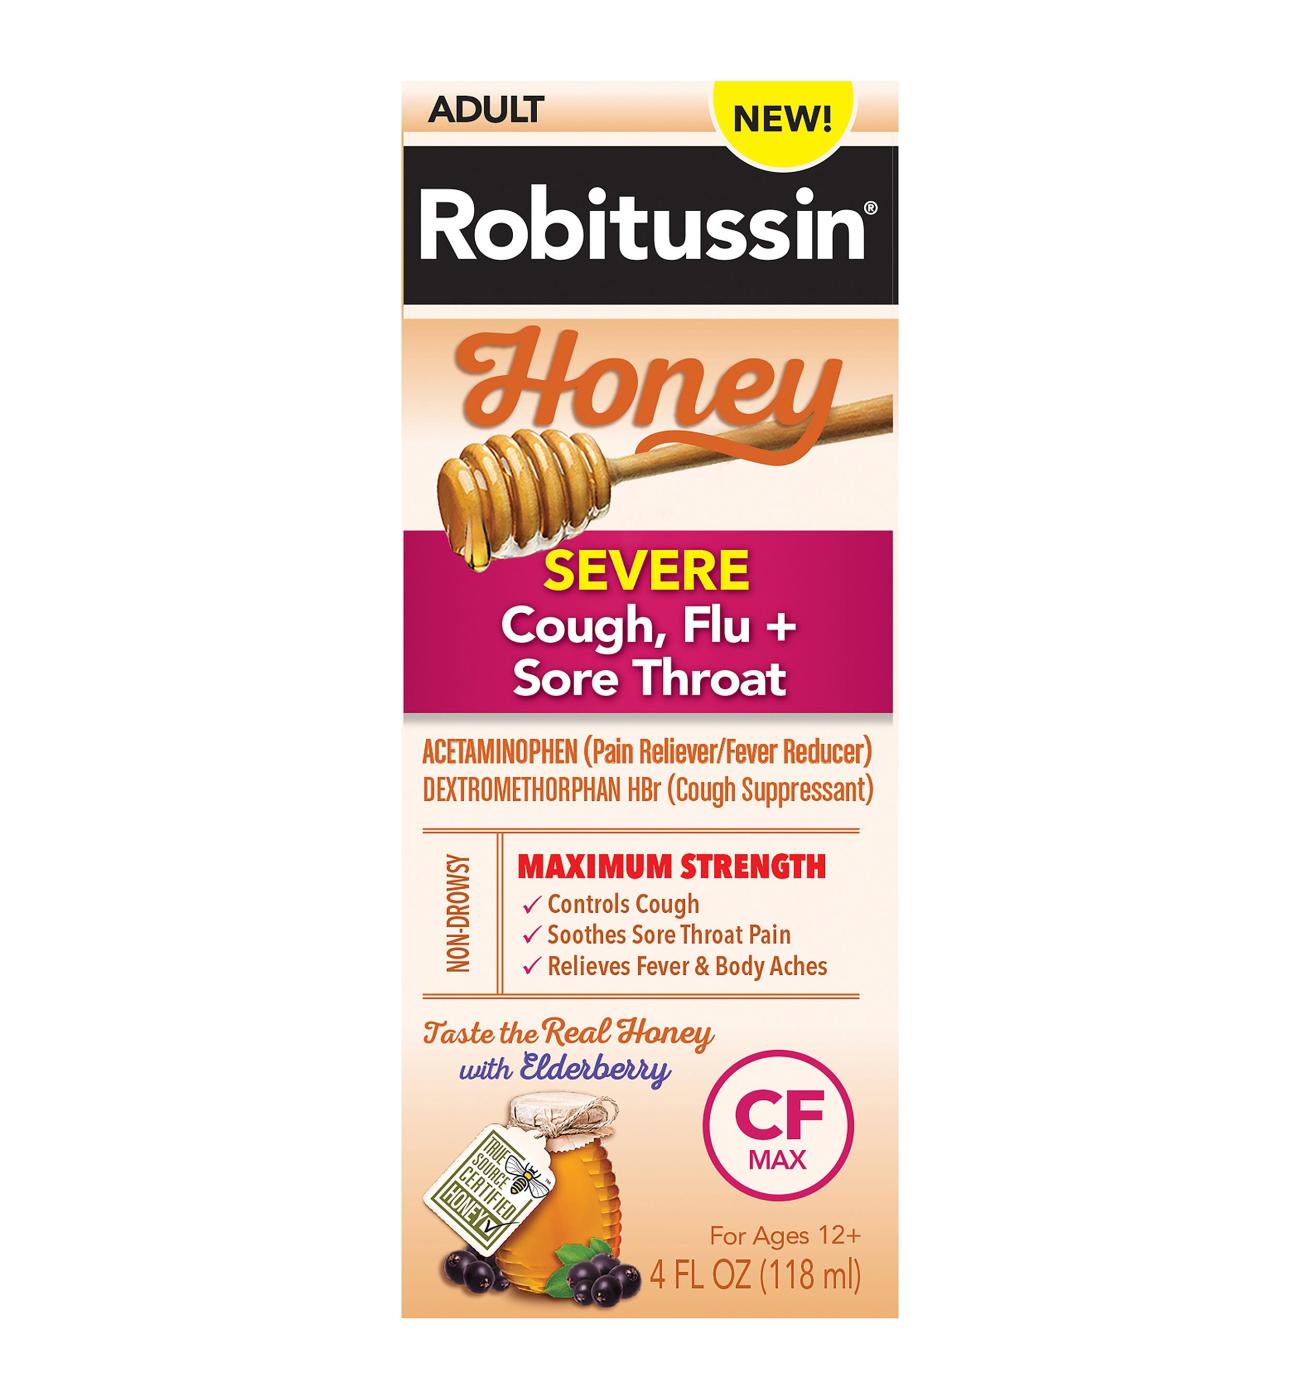 Robitussin Honey Maximum Strength Severe Cough, Flu + Sore Throat; image 1 of 7